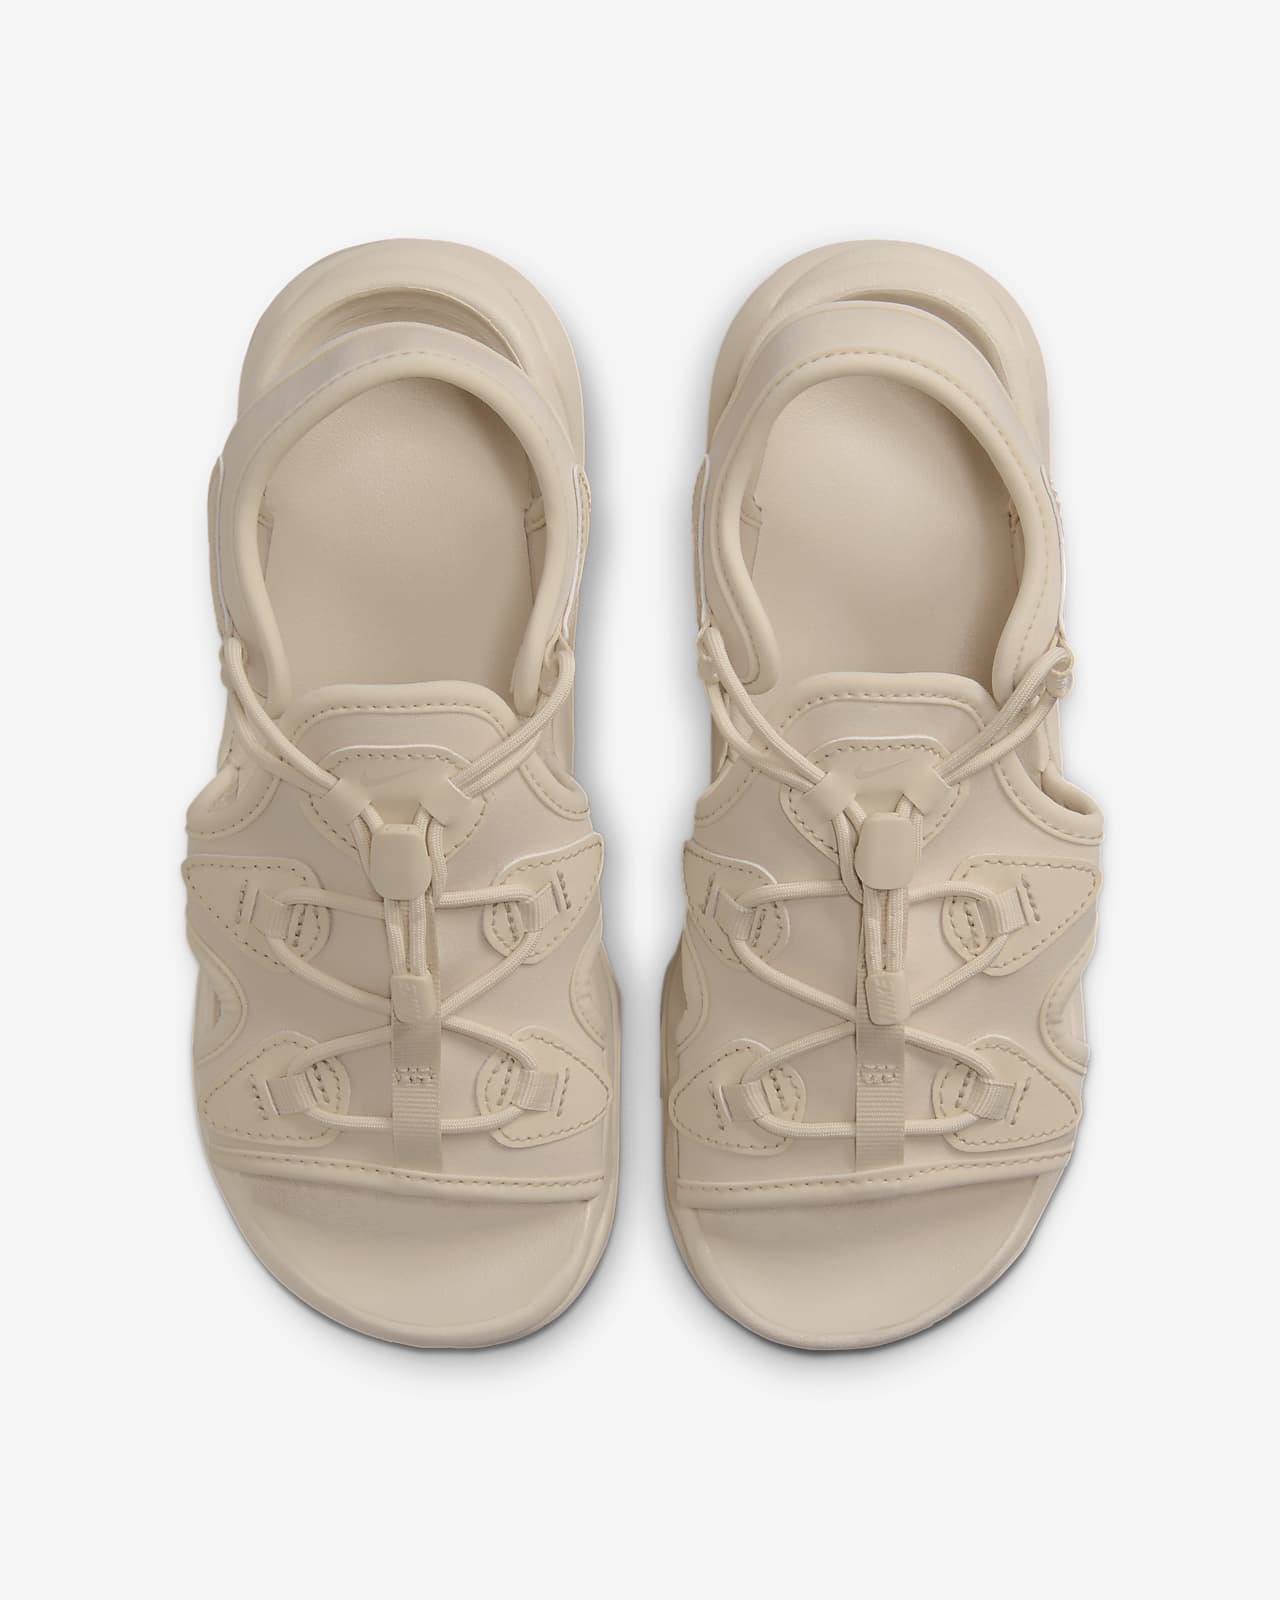 15 Best Barefoot Sandals for Kids